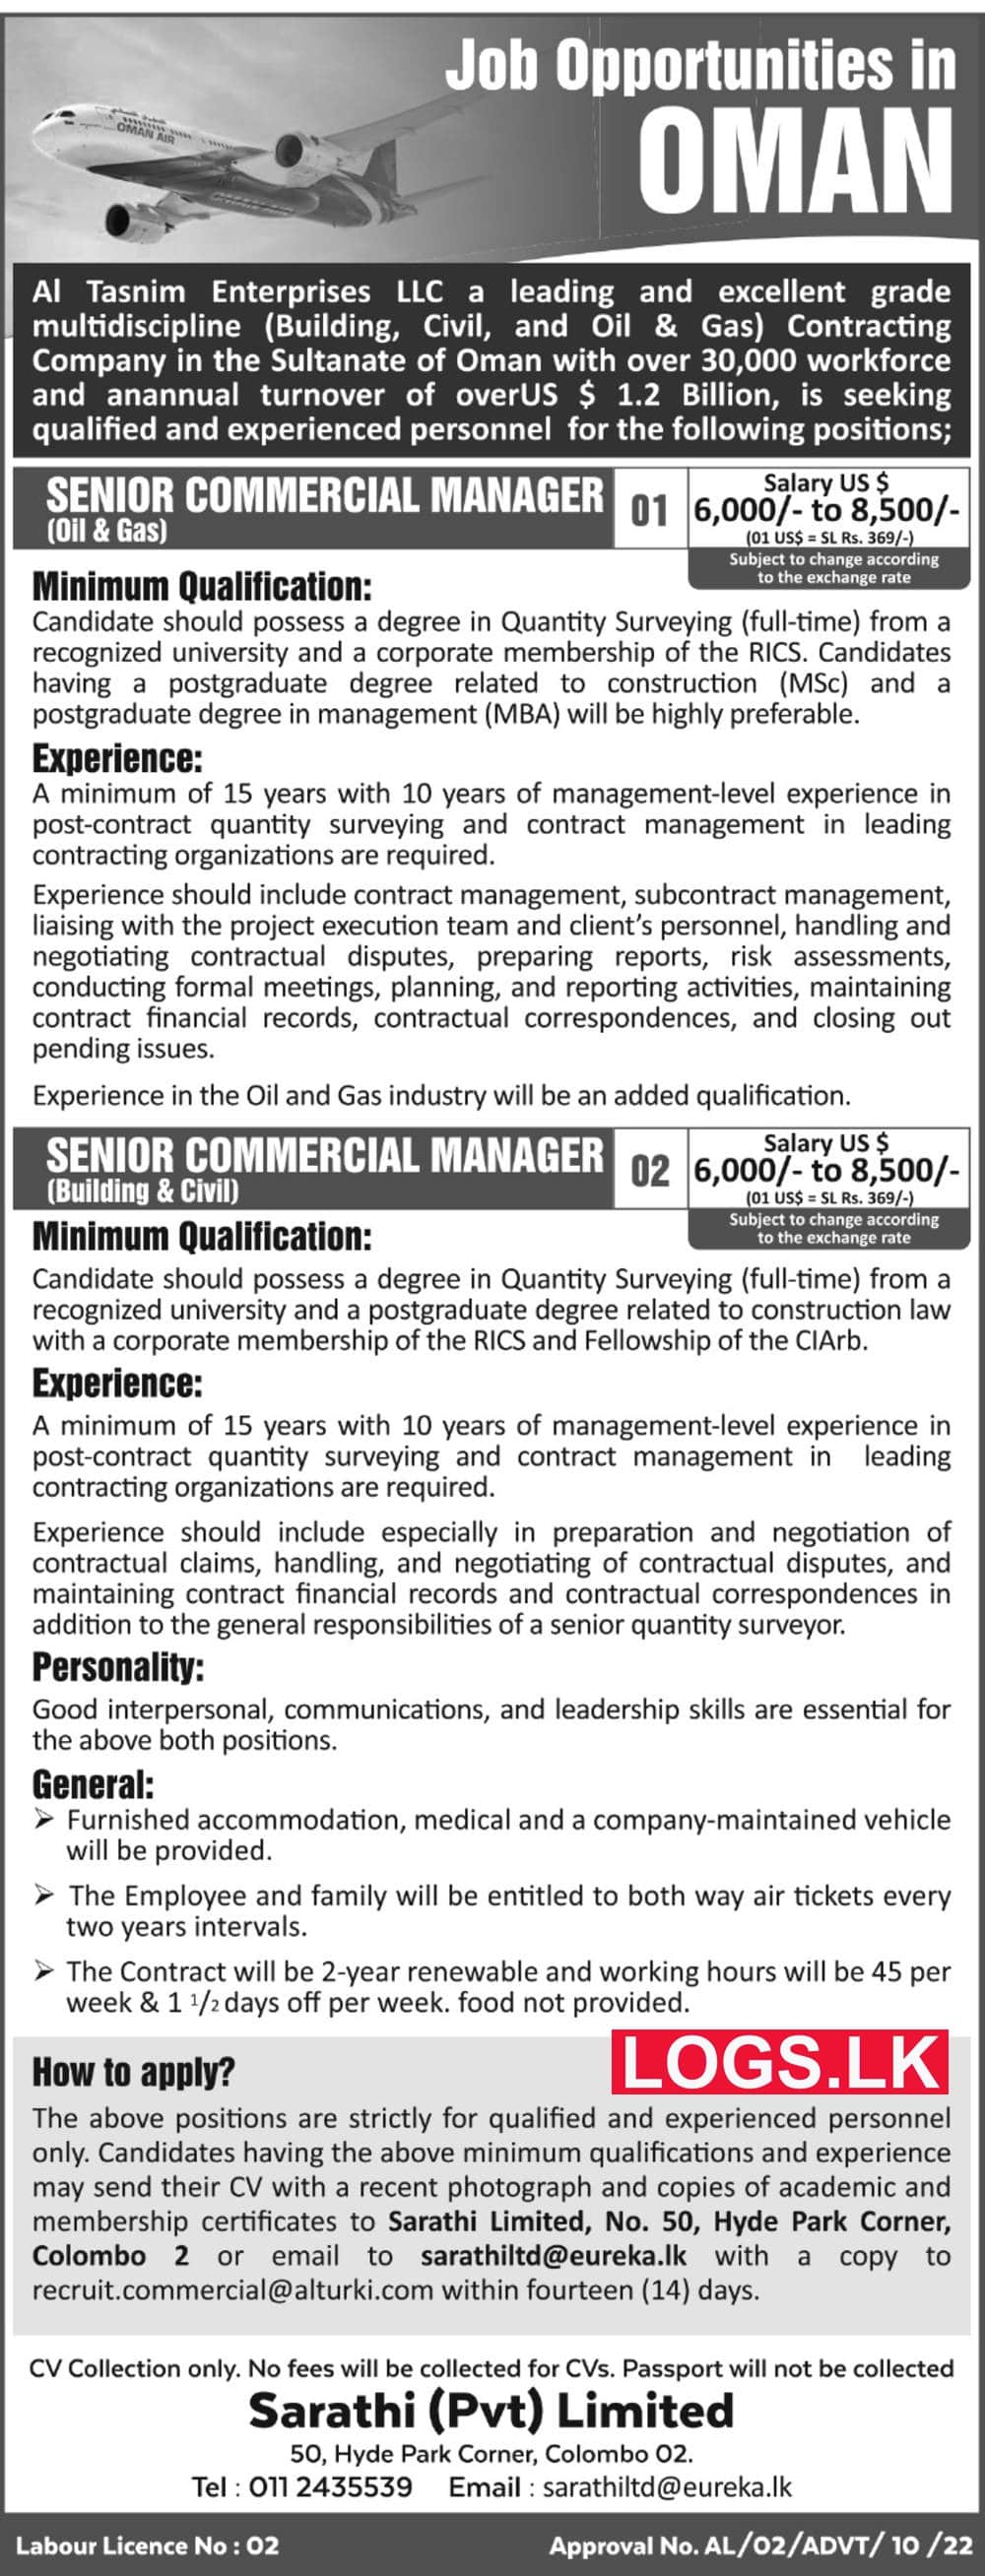 Senior Commercial Manager Job Vacancies in Oman Details, Application